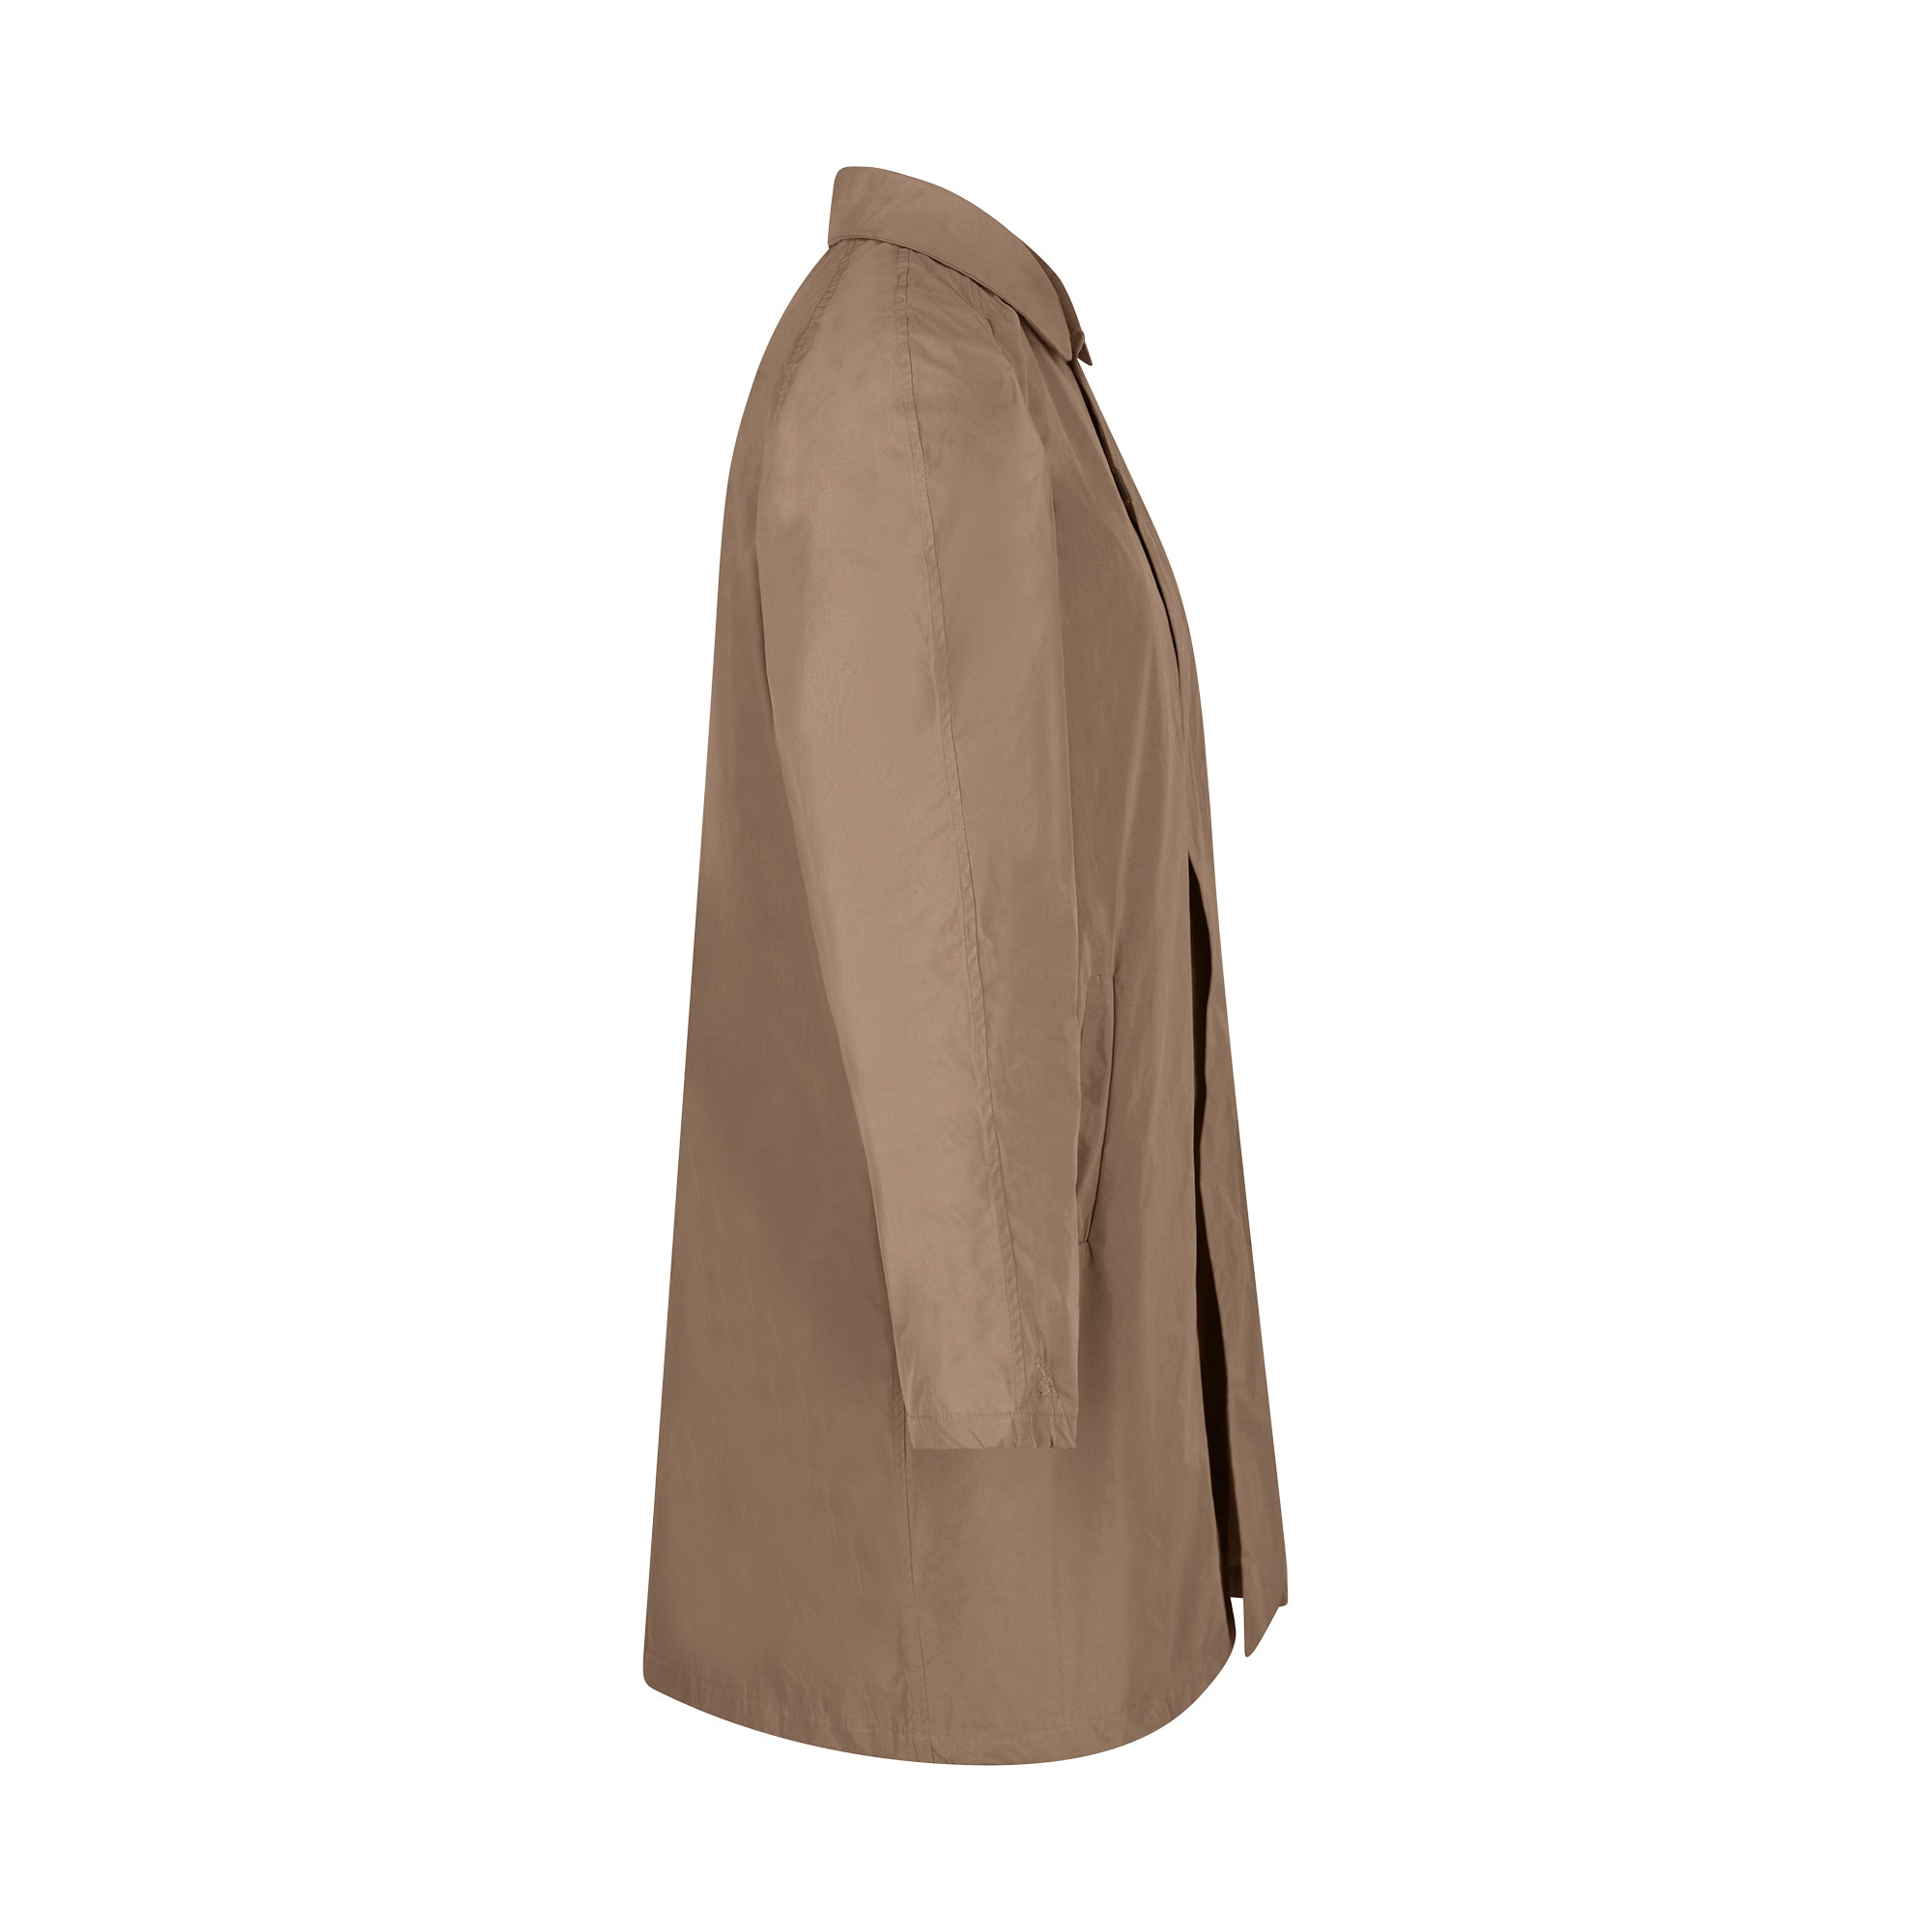 Strato men's raincoat - sand color - side view